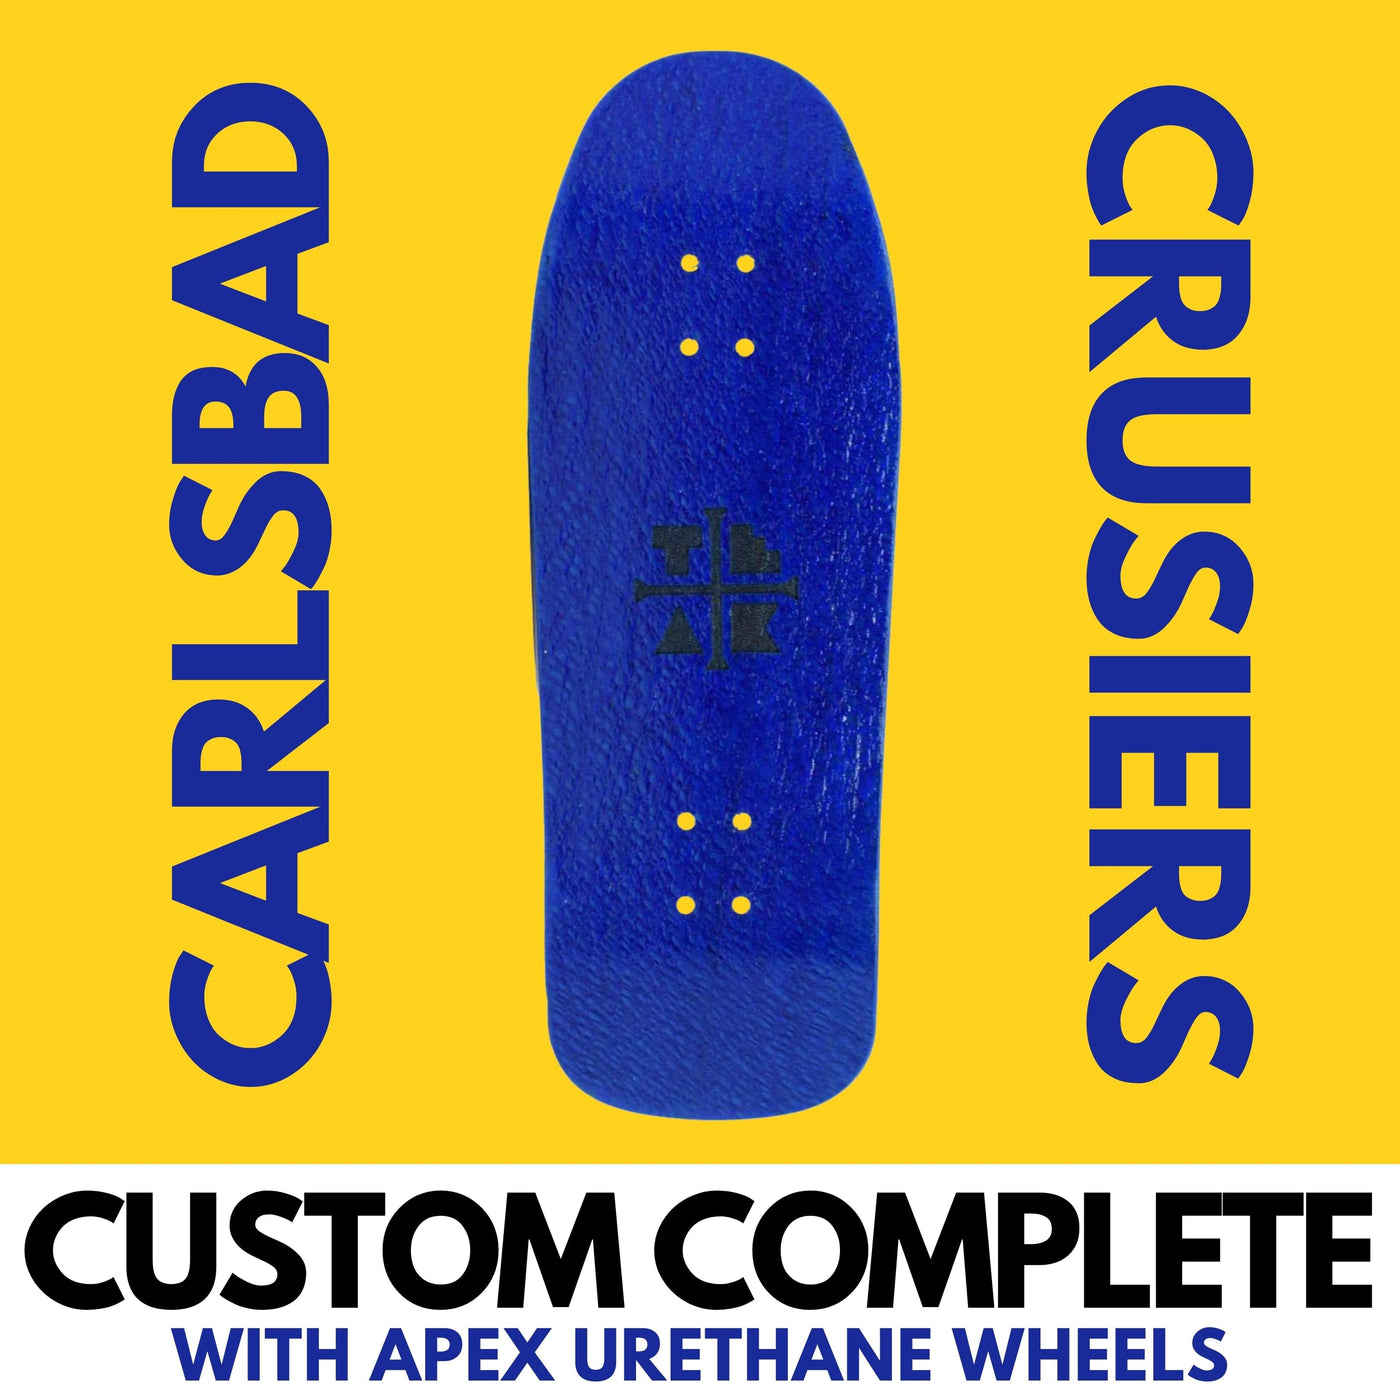 related_to_7973002903805 Custom Test Carlsbad Bundle - Customer's Product with price 0.00 ID zU9y82ZYRmrM2zcYYZ3JQKd8